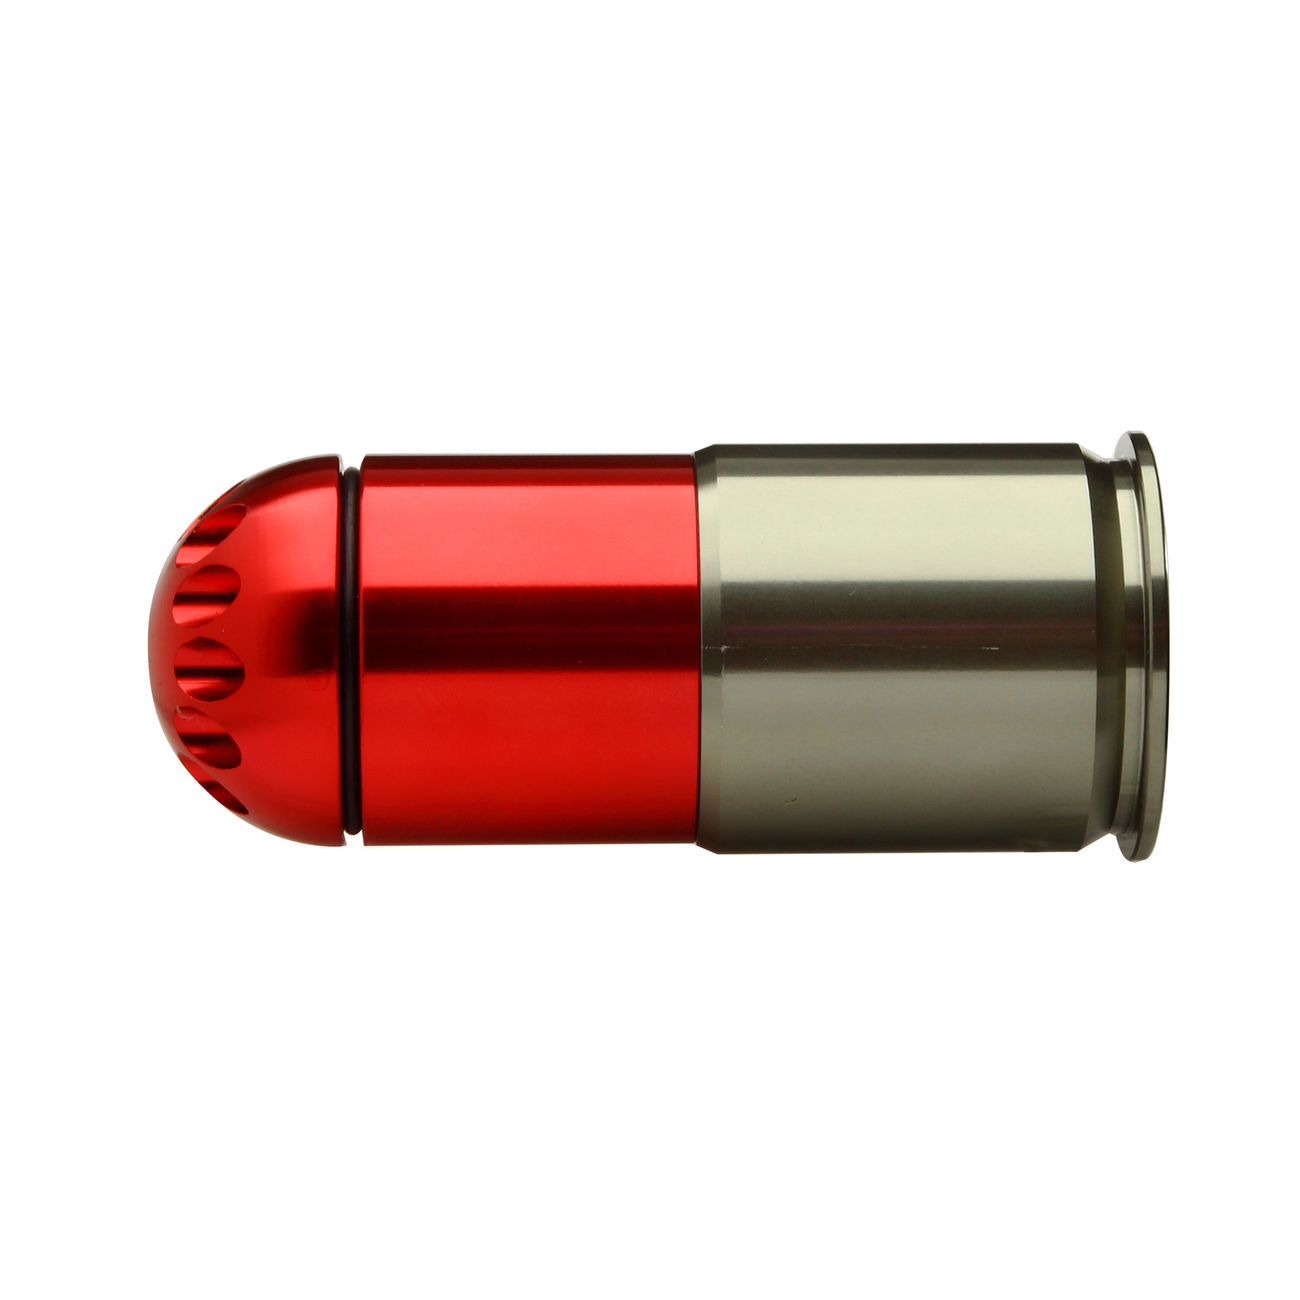 MadBull XM108HP 40mm Vollmetall Hlse / Einlegepatrone f. 108 6mm BBs rot Bild 1